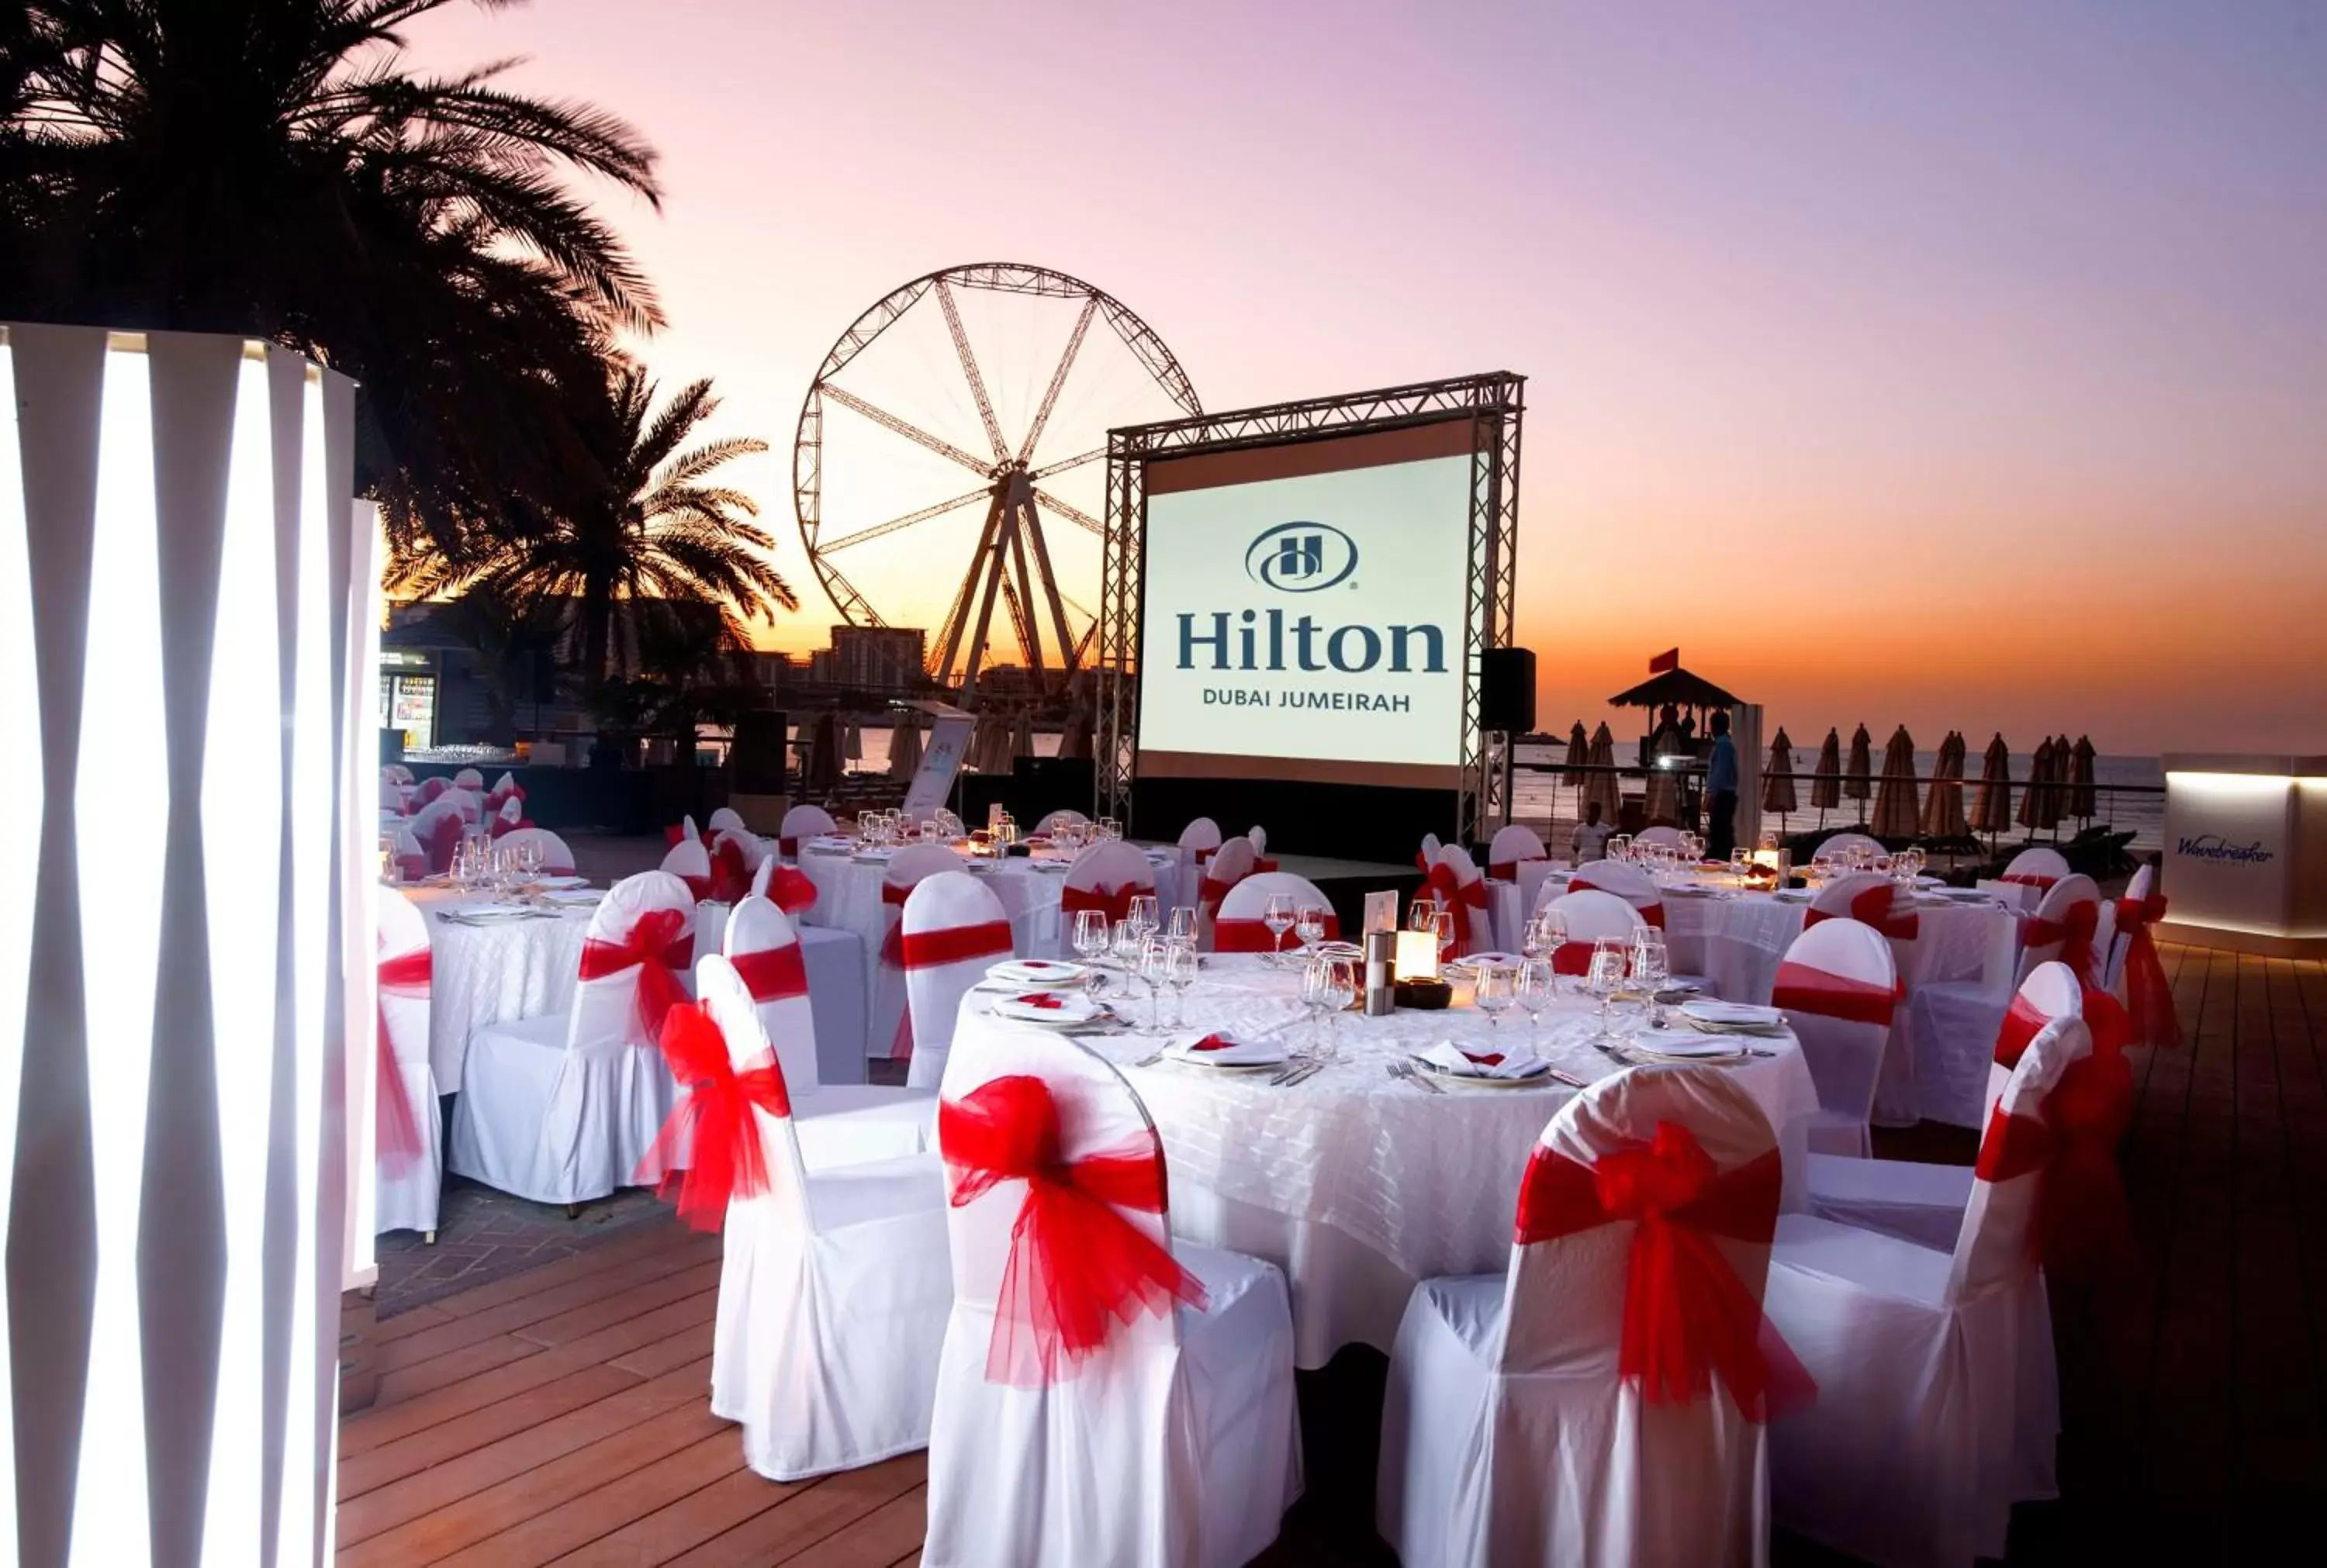 Dining area in Hilton Dubai Jumeirah